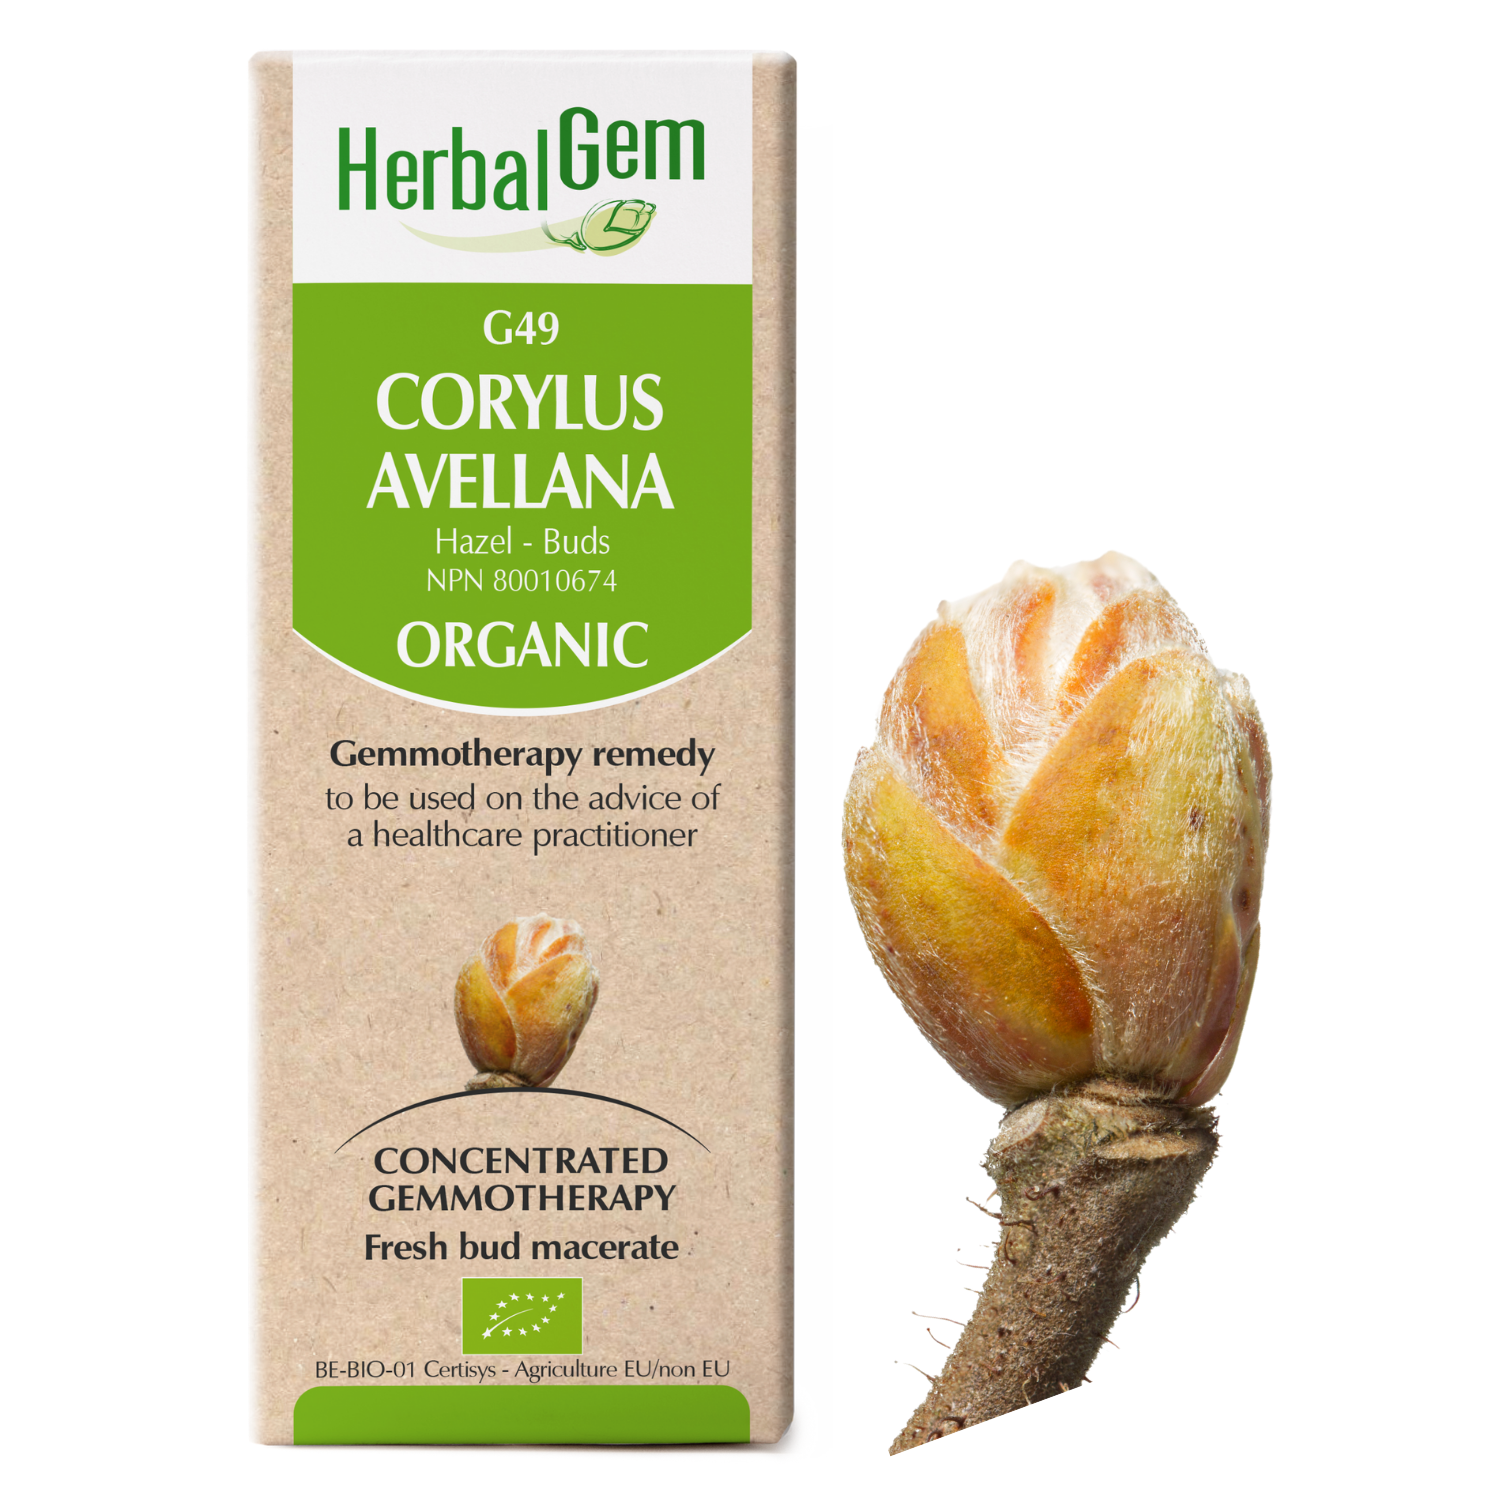 G49 Corylus avellana Gemmotherapy remedy Herbalgem